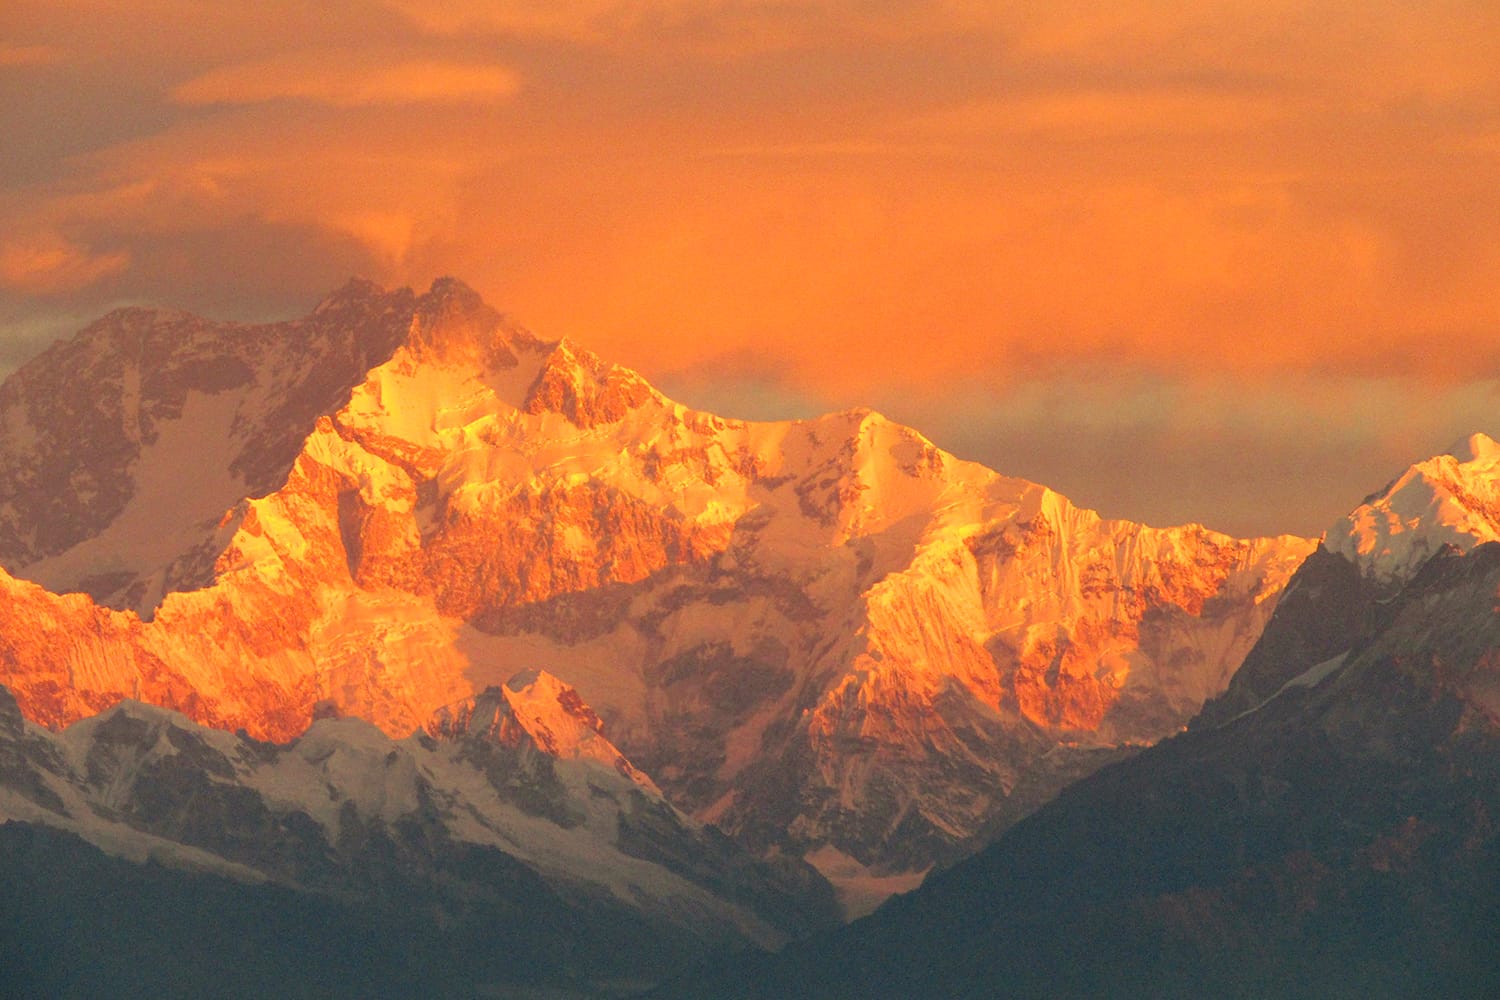 Morning View of Kachenjunga Peak from Tiger Hill, Darjeeling, India